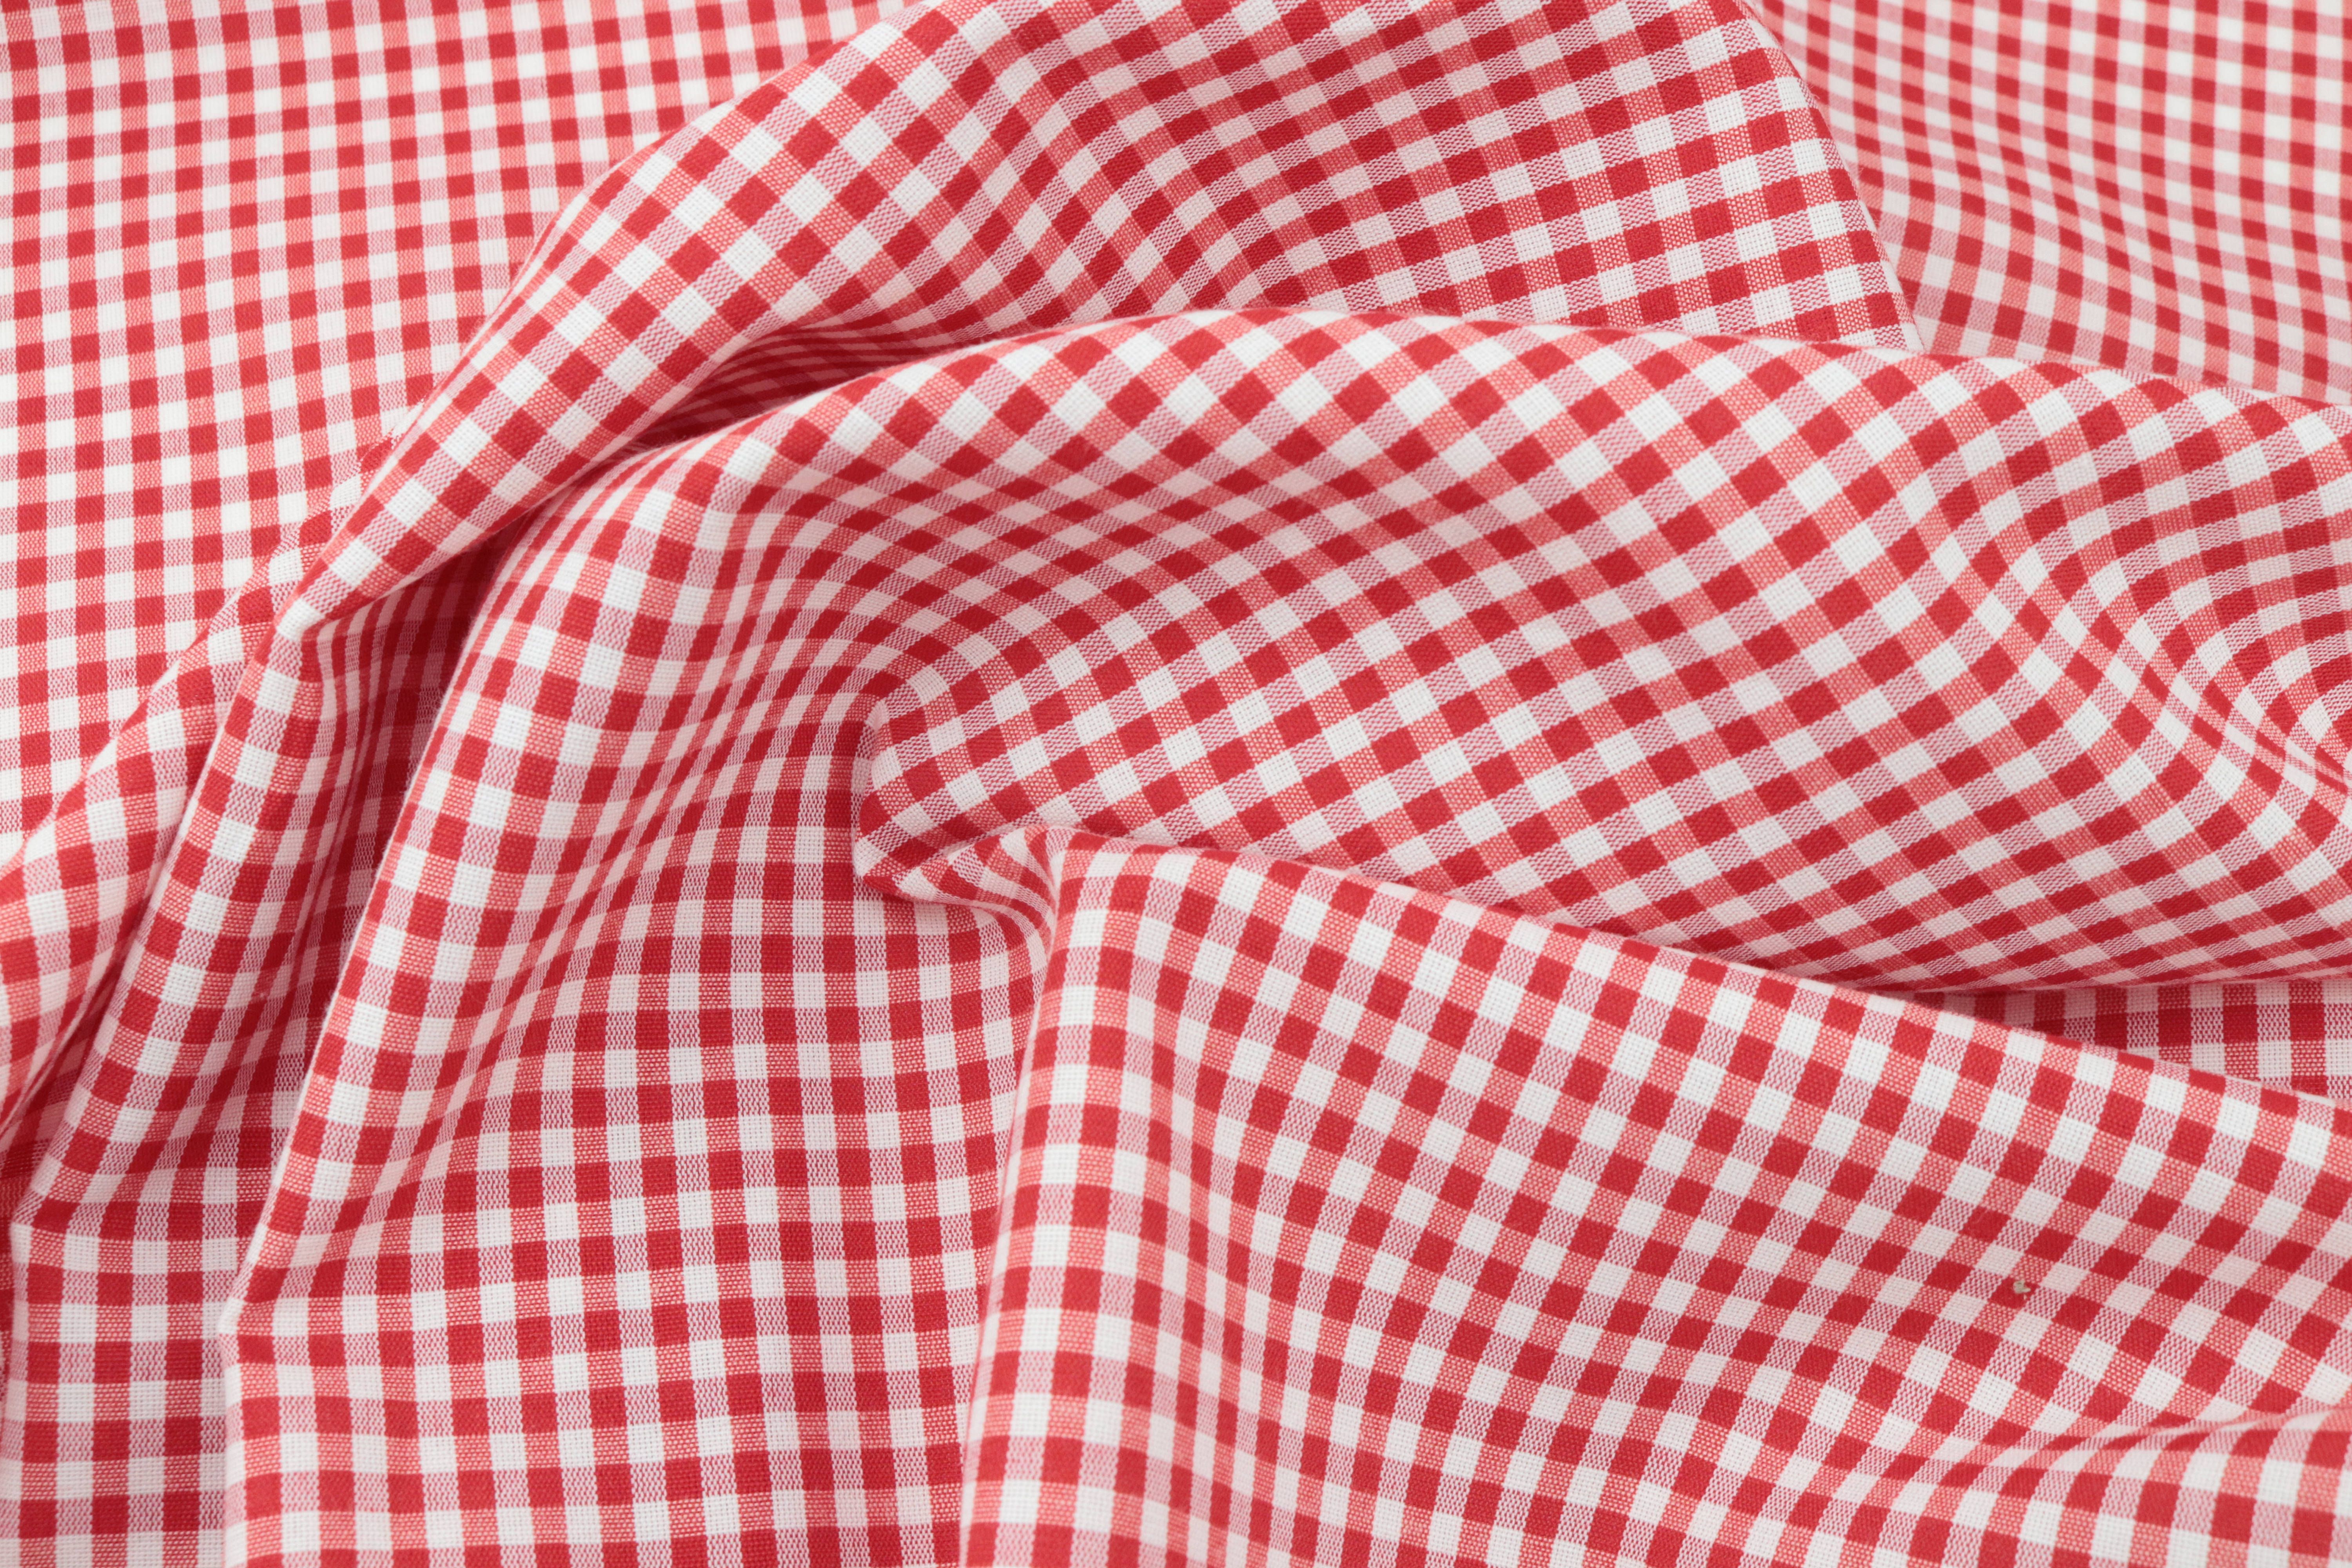  Kariert Hintergrundbild 6000x4000. Download Red And White Checkered Tablecloth Wallpaper